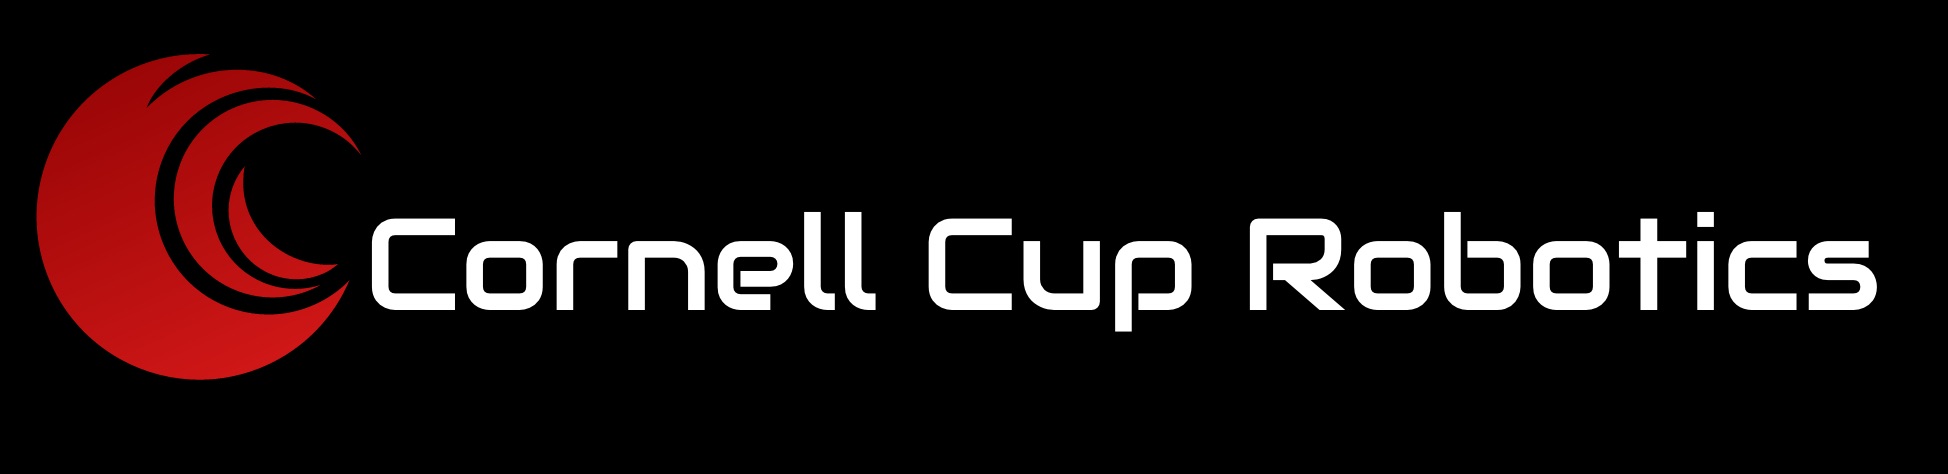 Cornell Cup Robotics logo